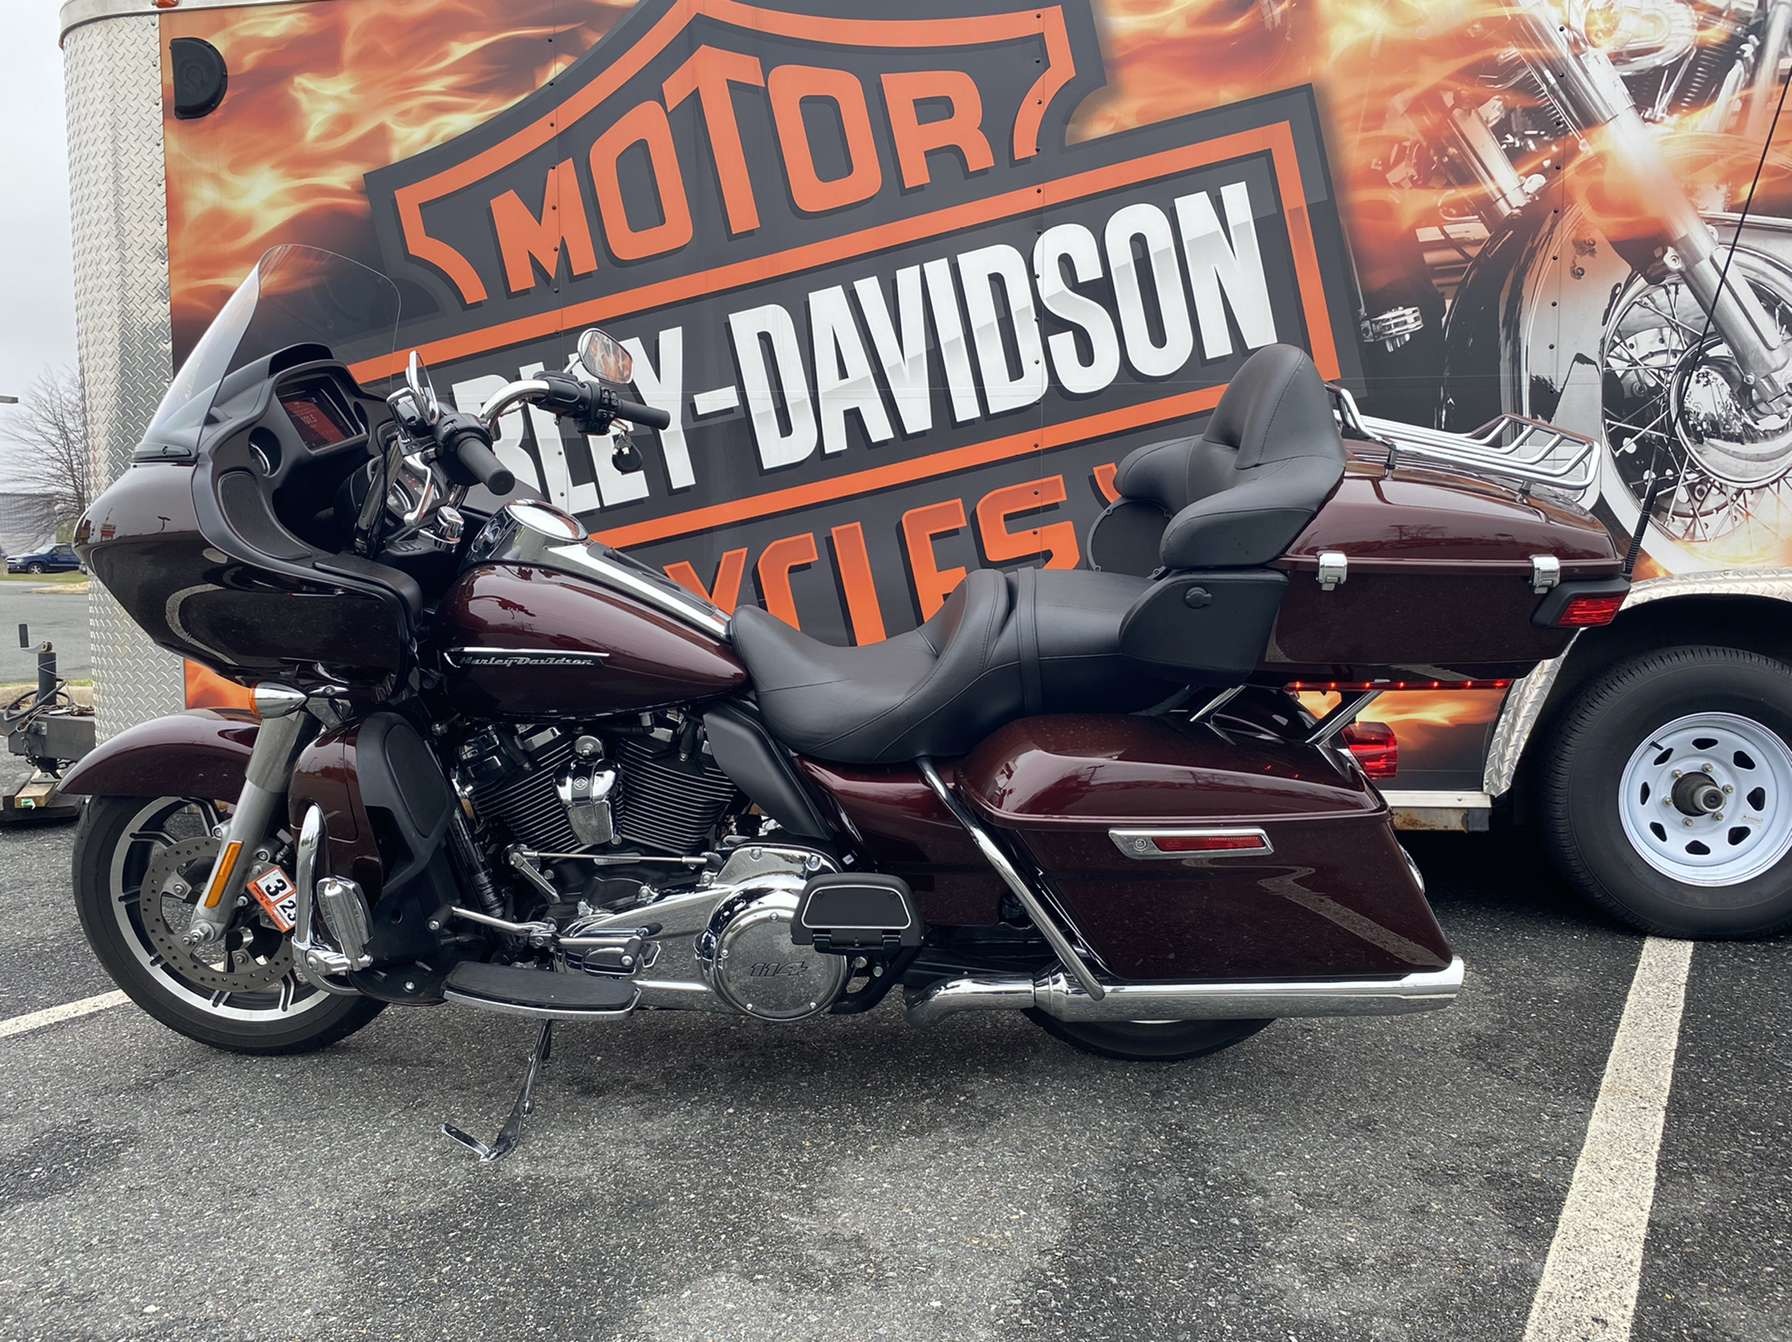 2019 Harley-Davidson Road Glide® Ultra in Fredericksburg, Virginia - Photo 2